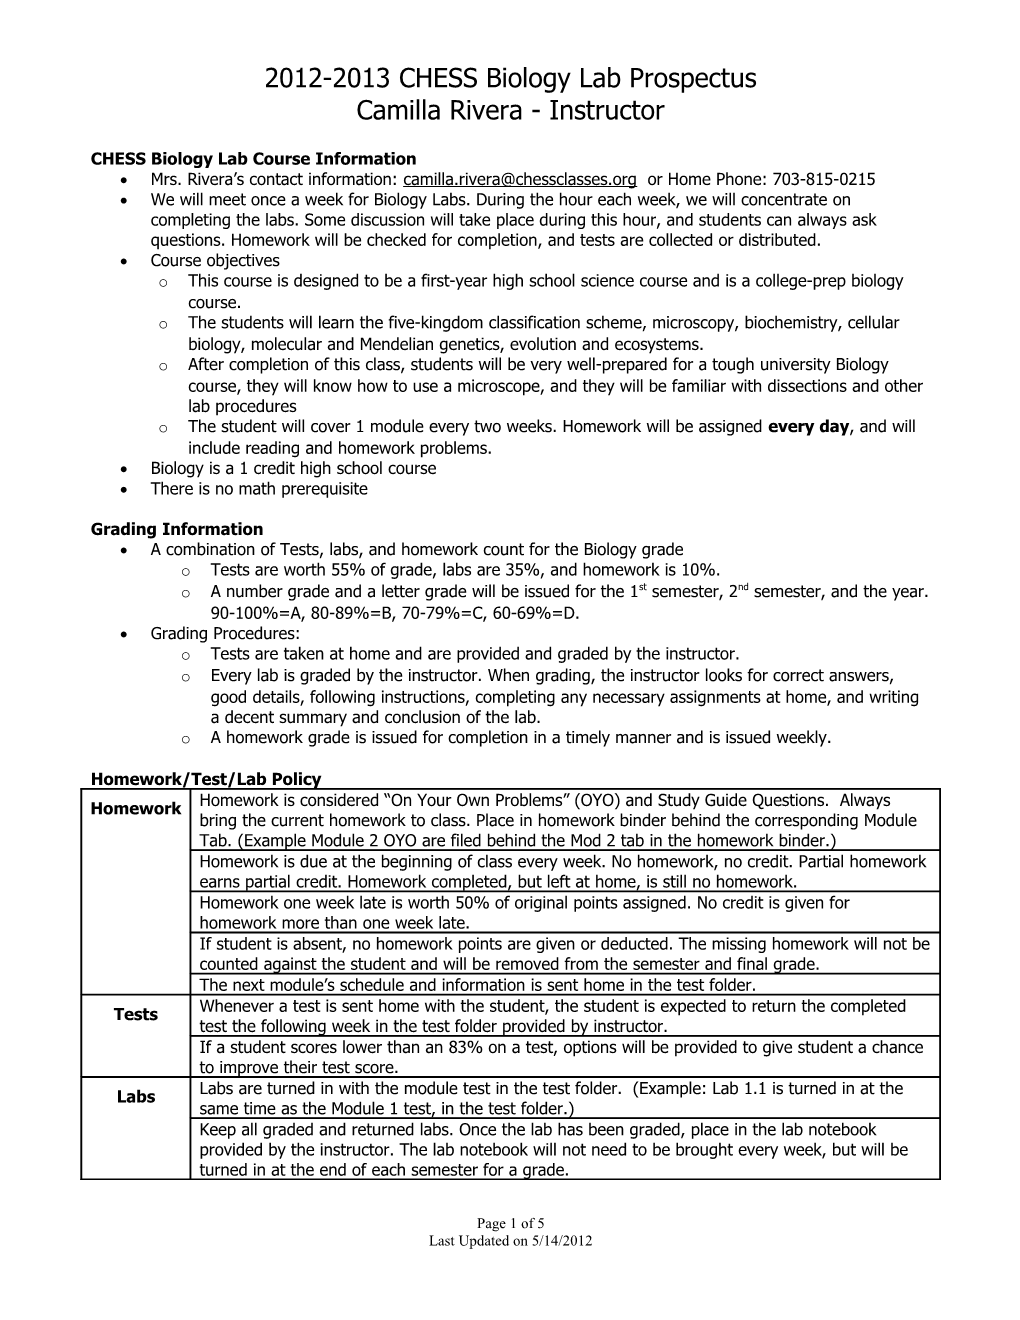 Teacher Prospectus Guidelines